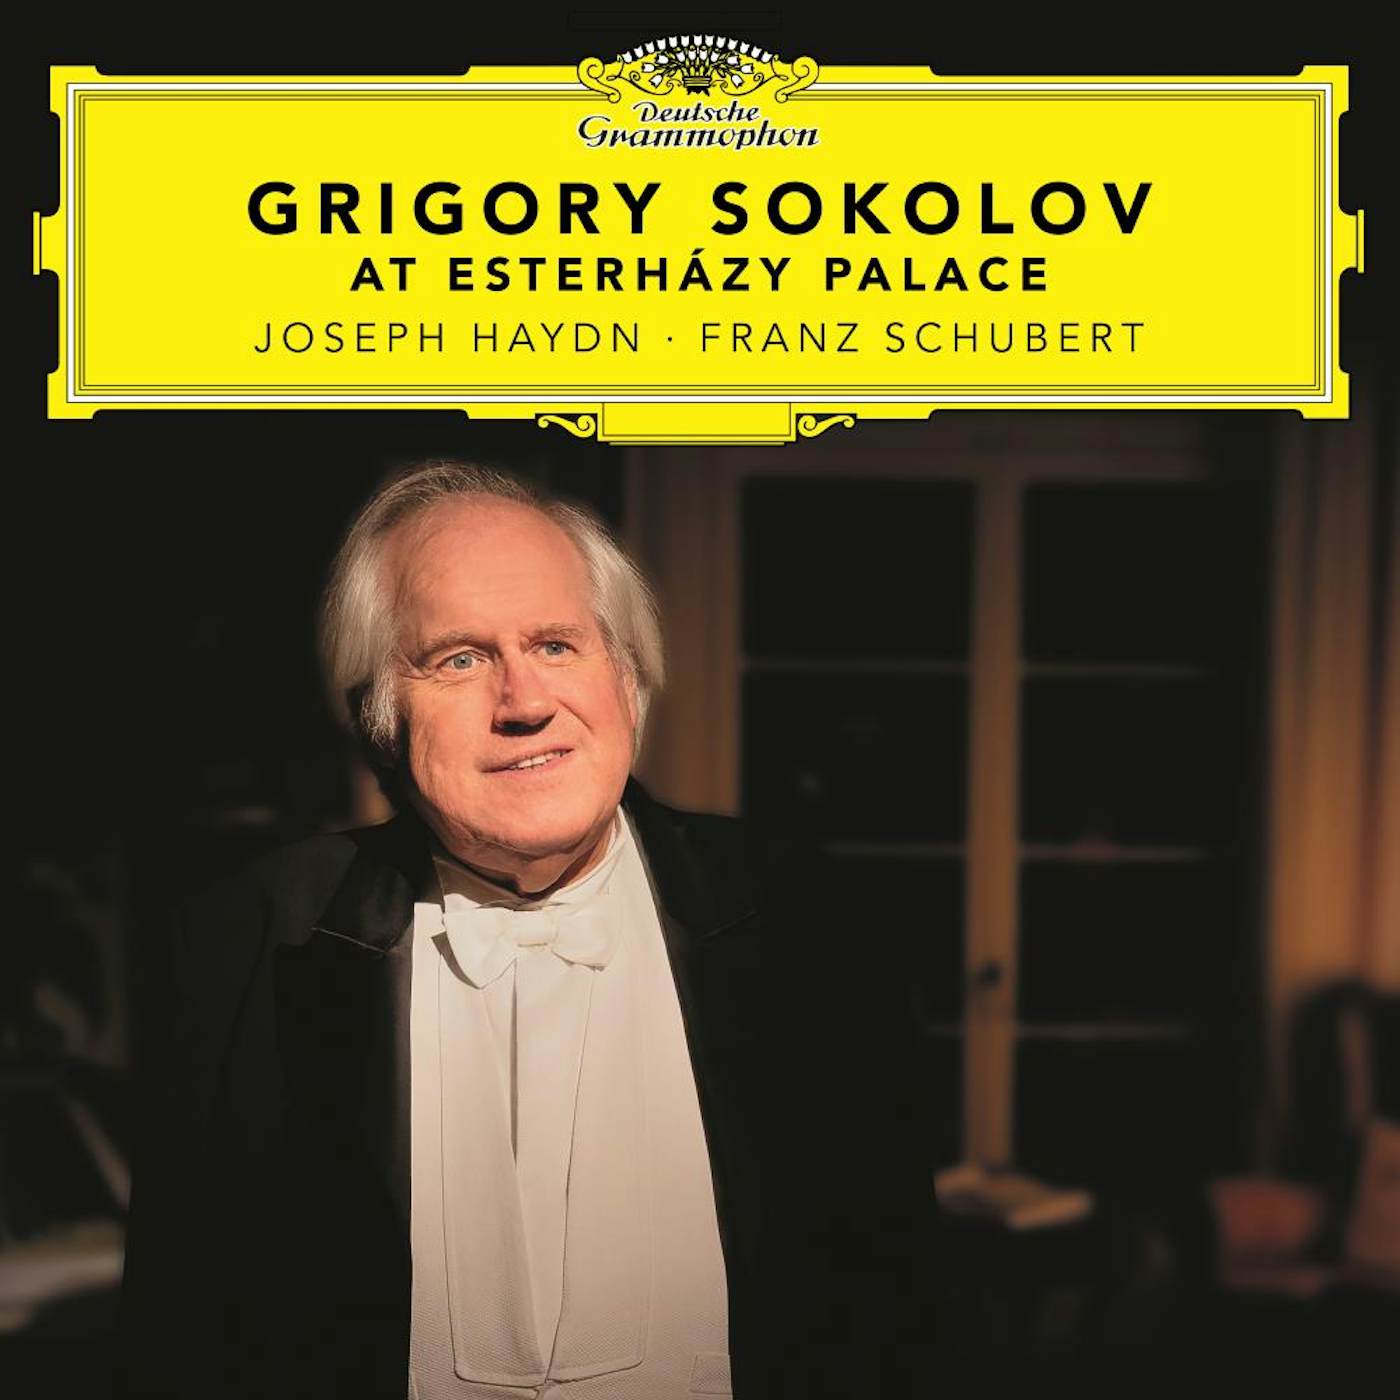 GRIGORY SOKOLOV AT ESTERHAZY PALACE Vinyl Record